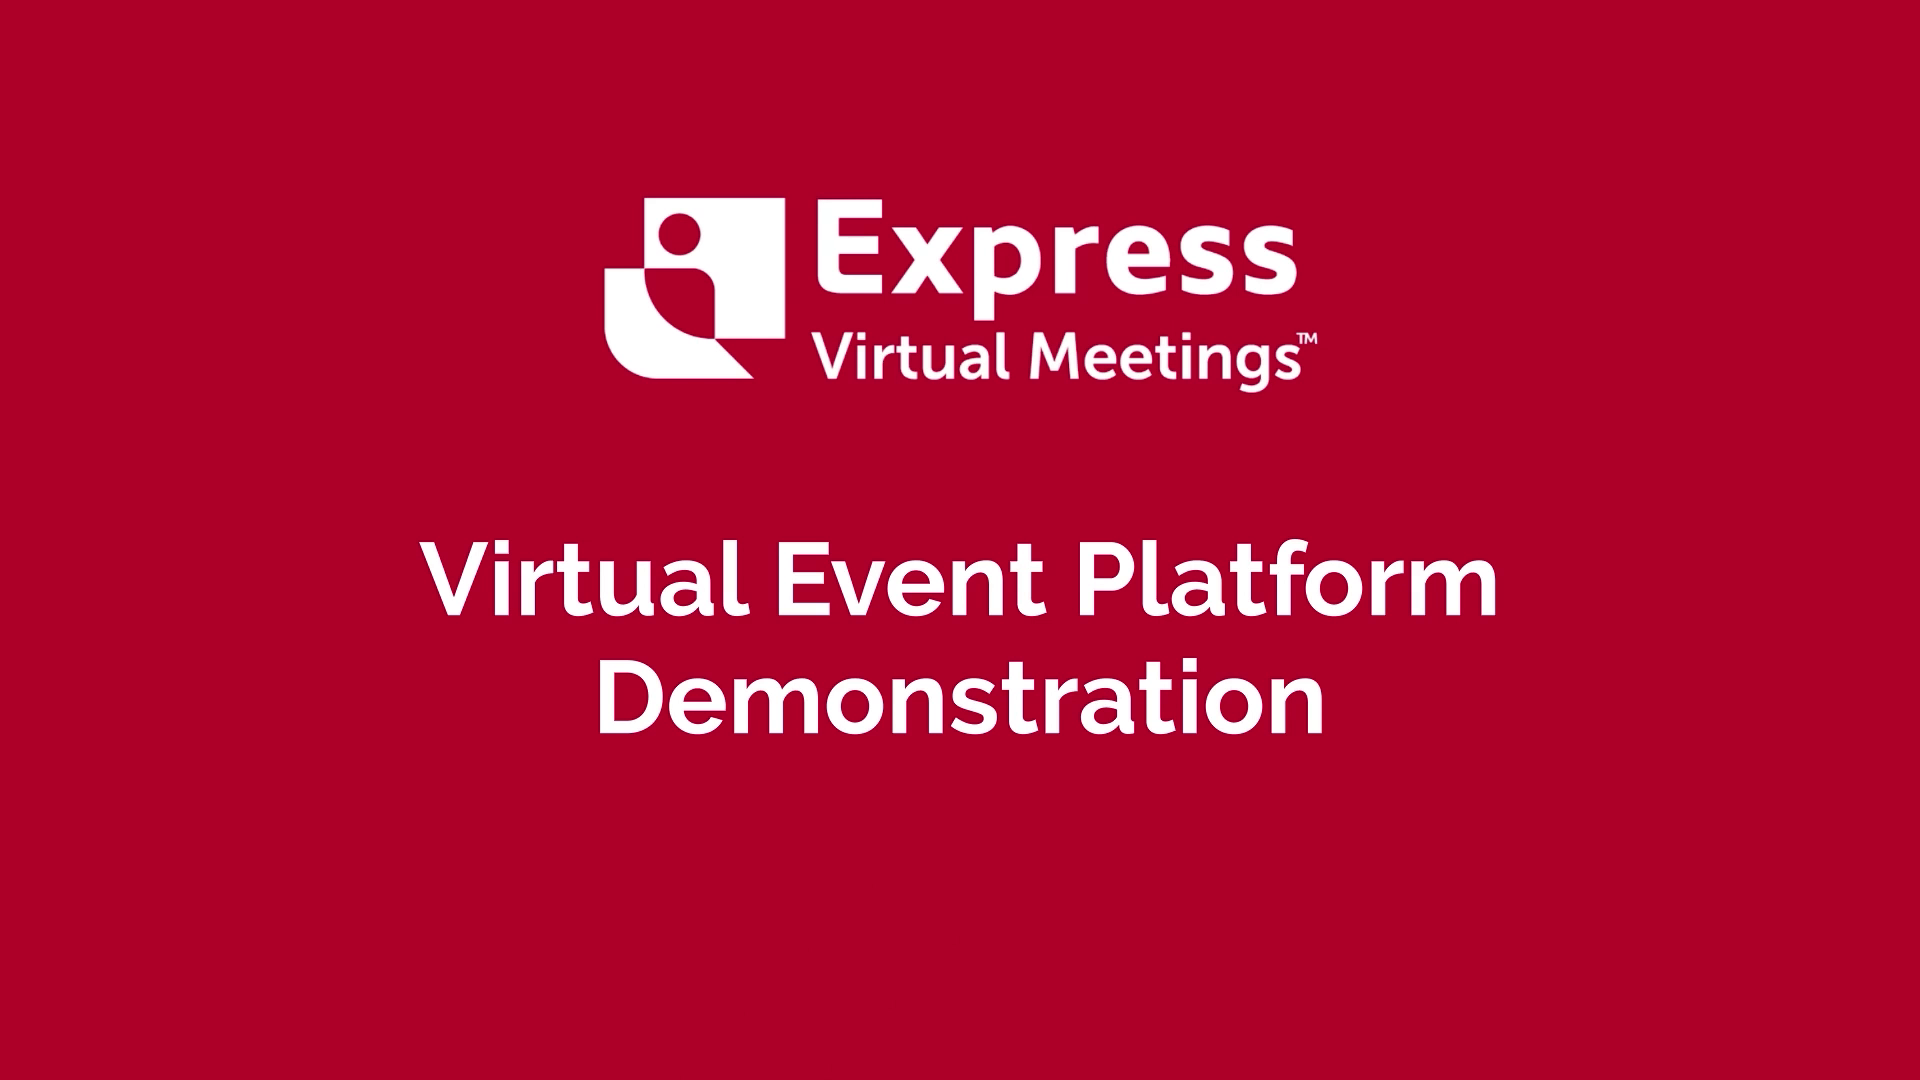 Express Virtual Meetings Demo 211129